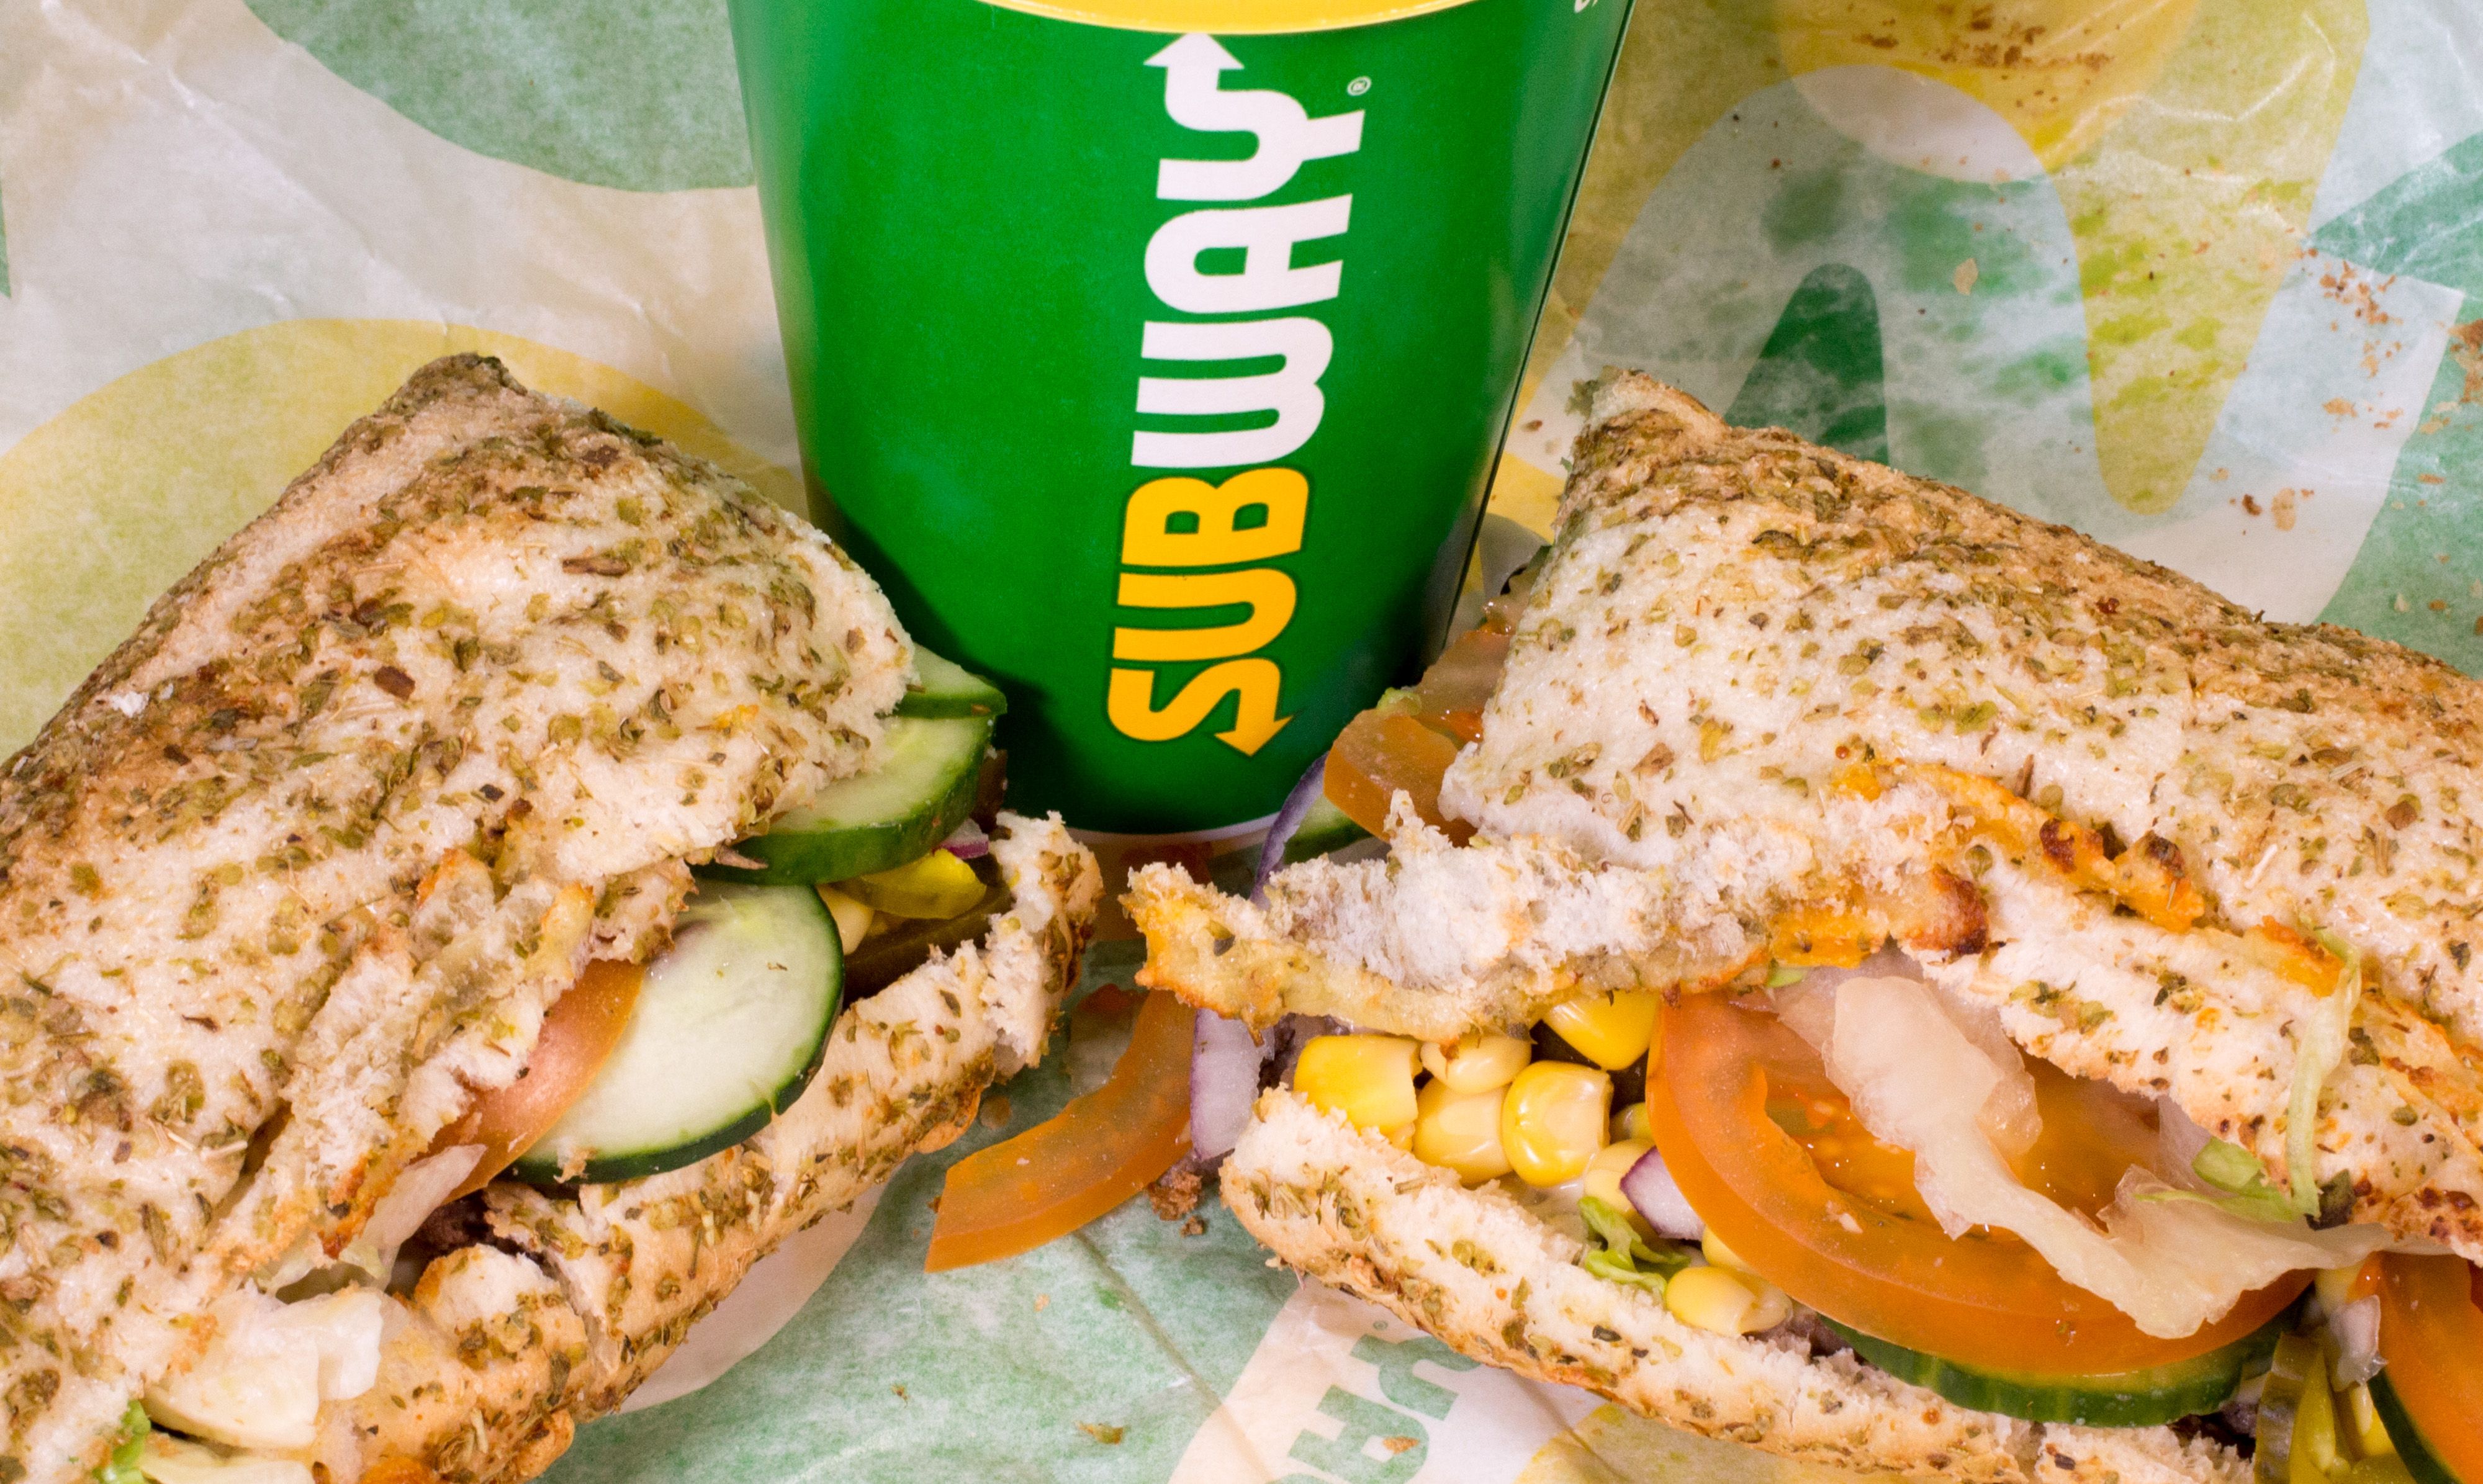 subway-6-inch-wheat-bread-nutrition-facts-bios-pics